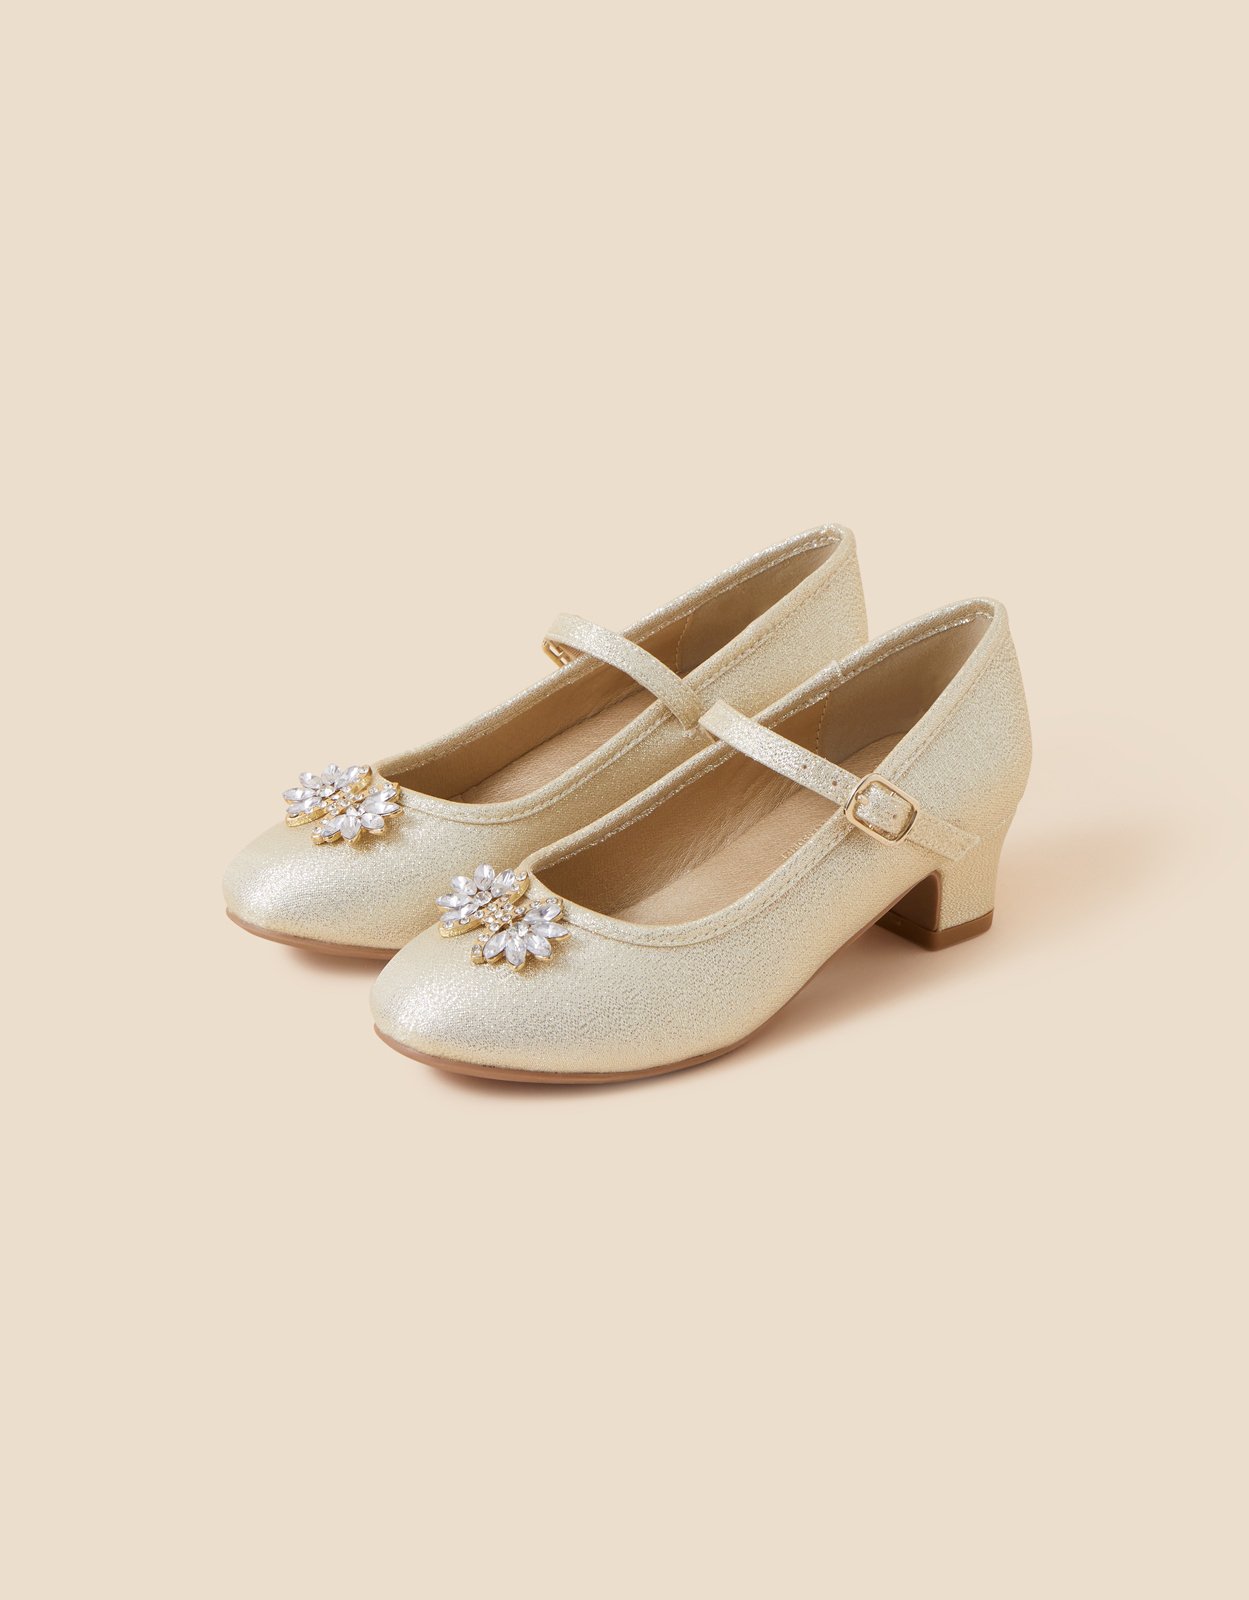 Accessorize Girl's Girls Shimmer Gem Flamenco Shoes Gold, Size: 12